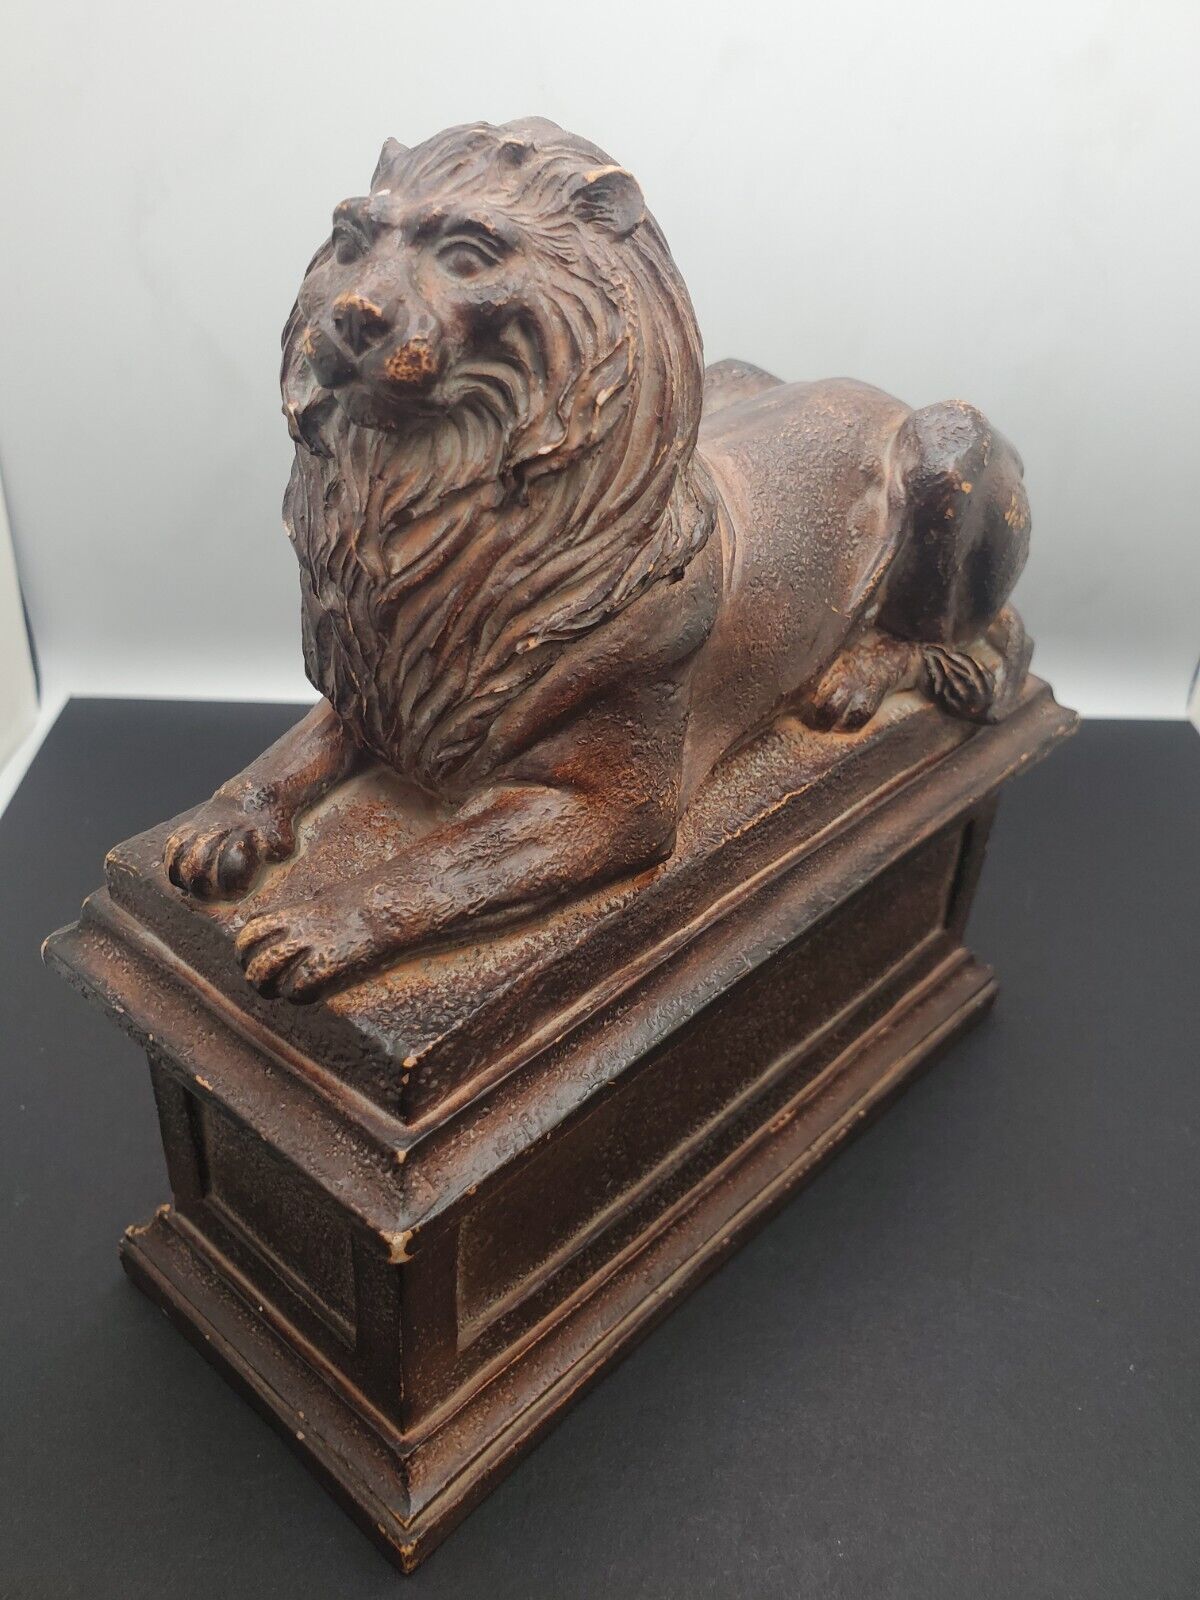 Lion Figure Lying On A Pedestal Sculpture